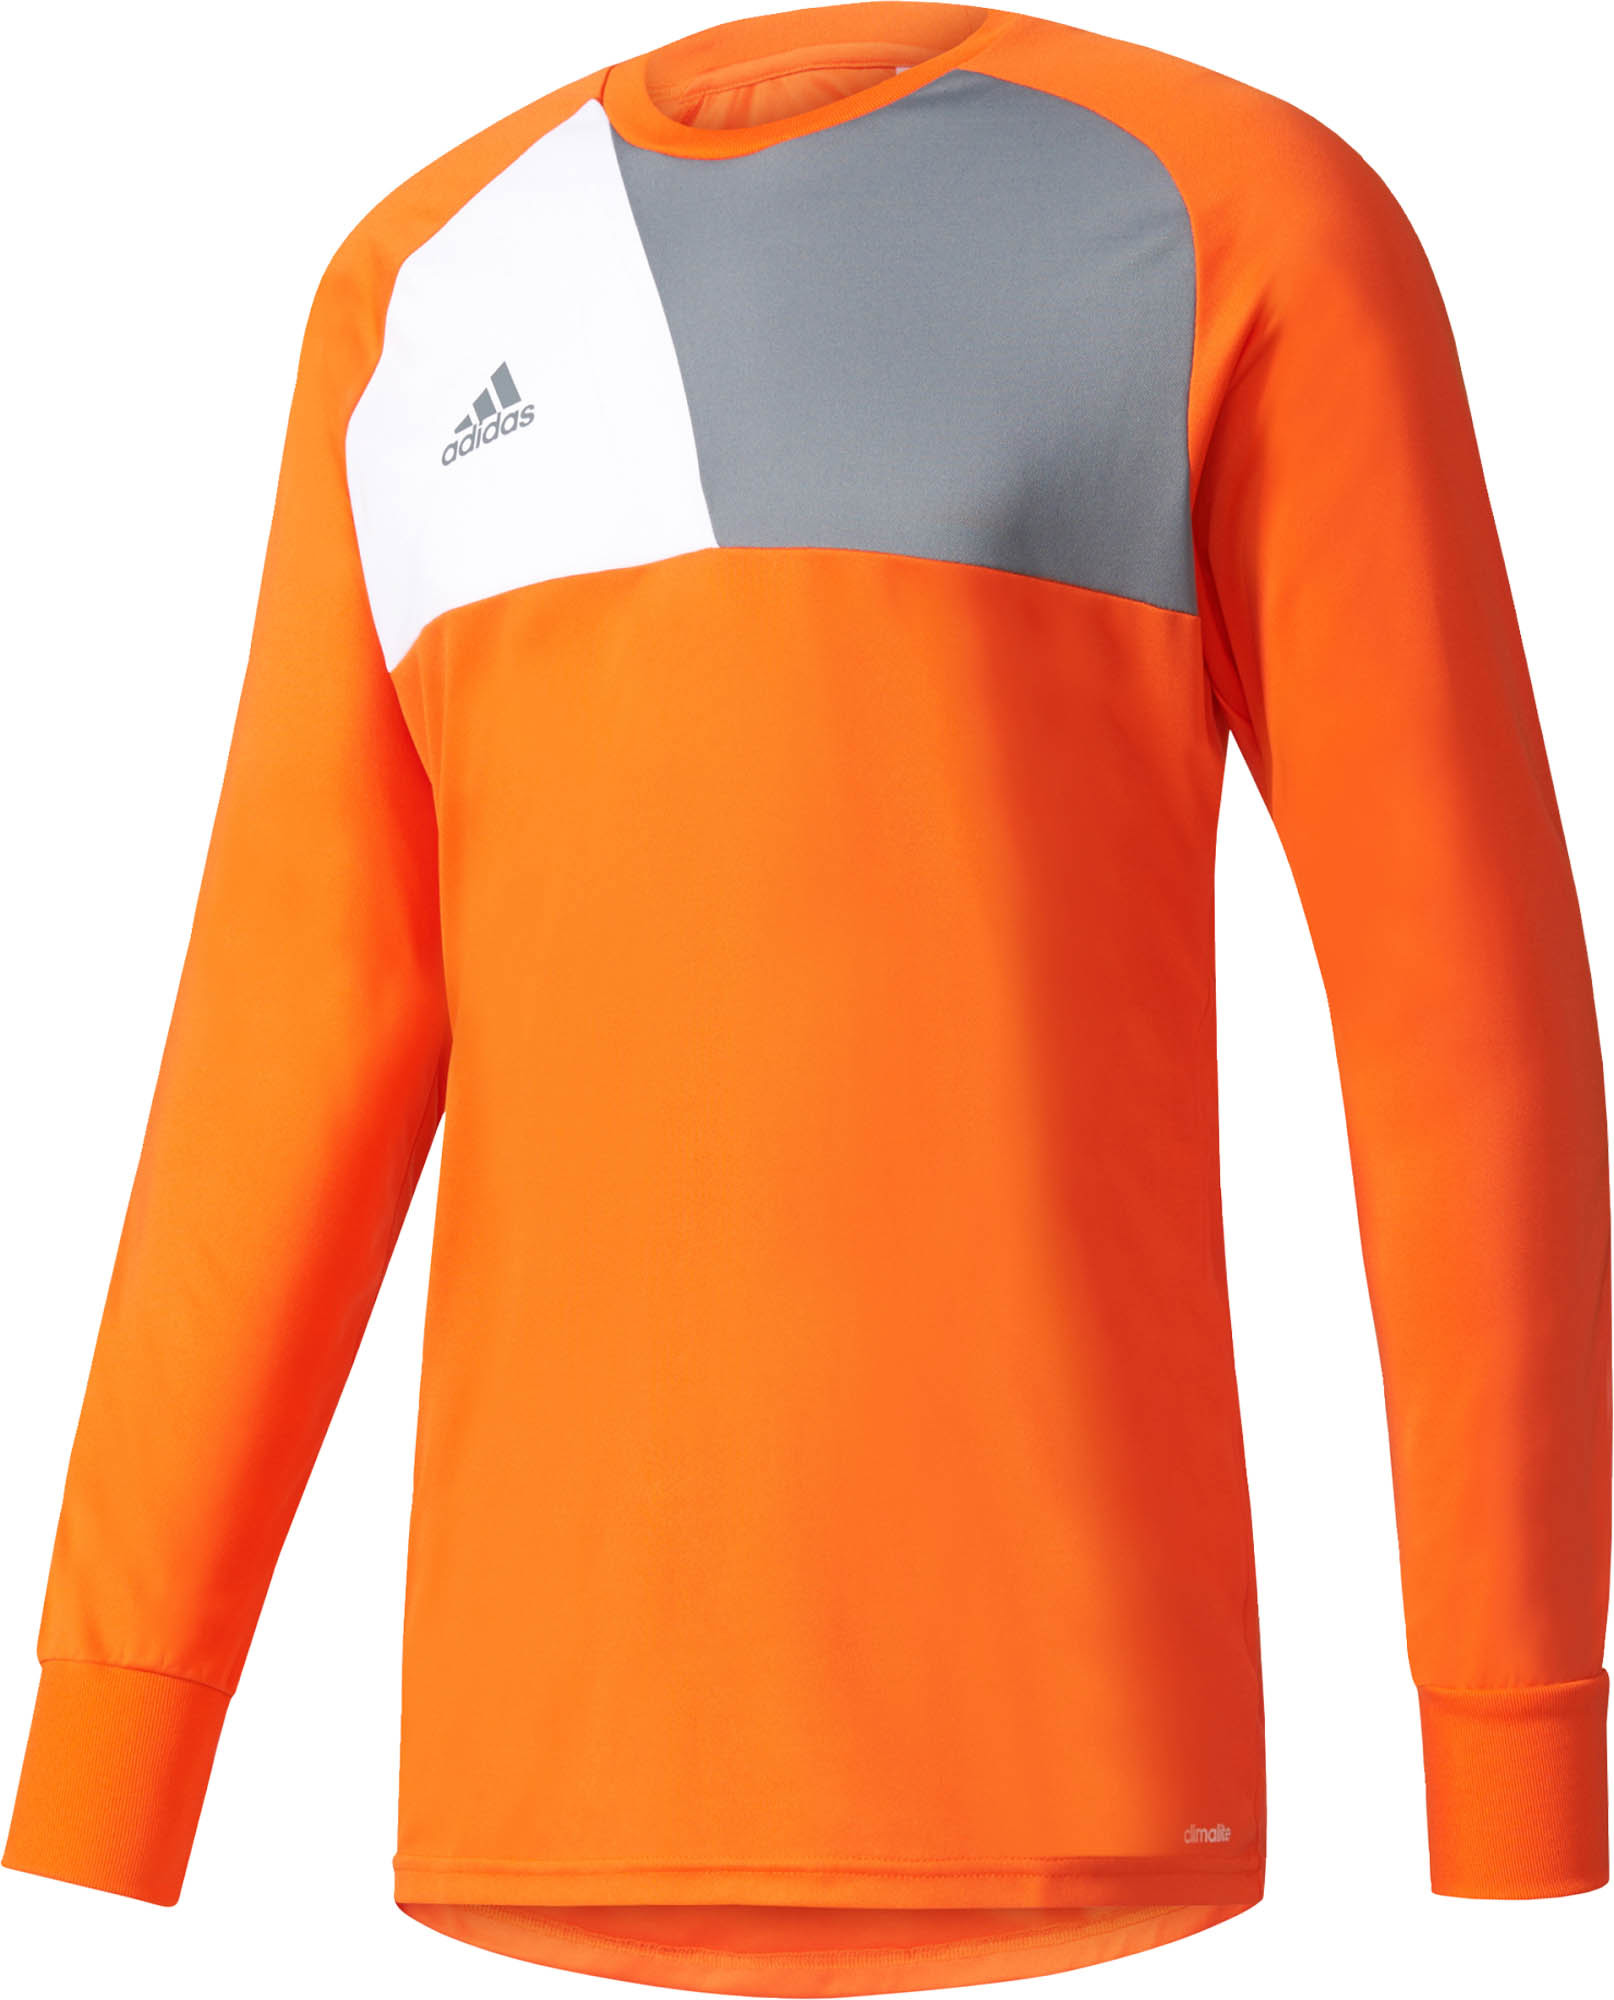 adidas goalkeeper kits